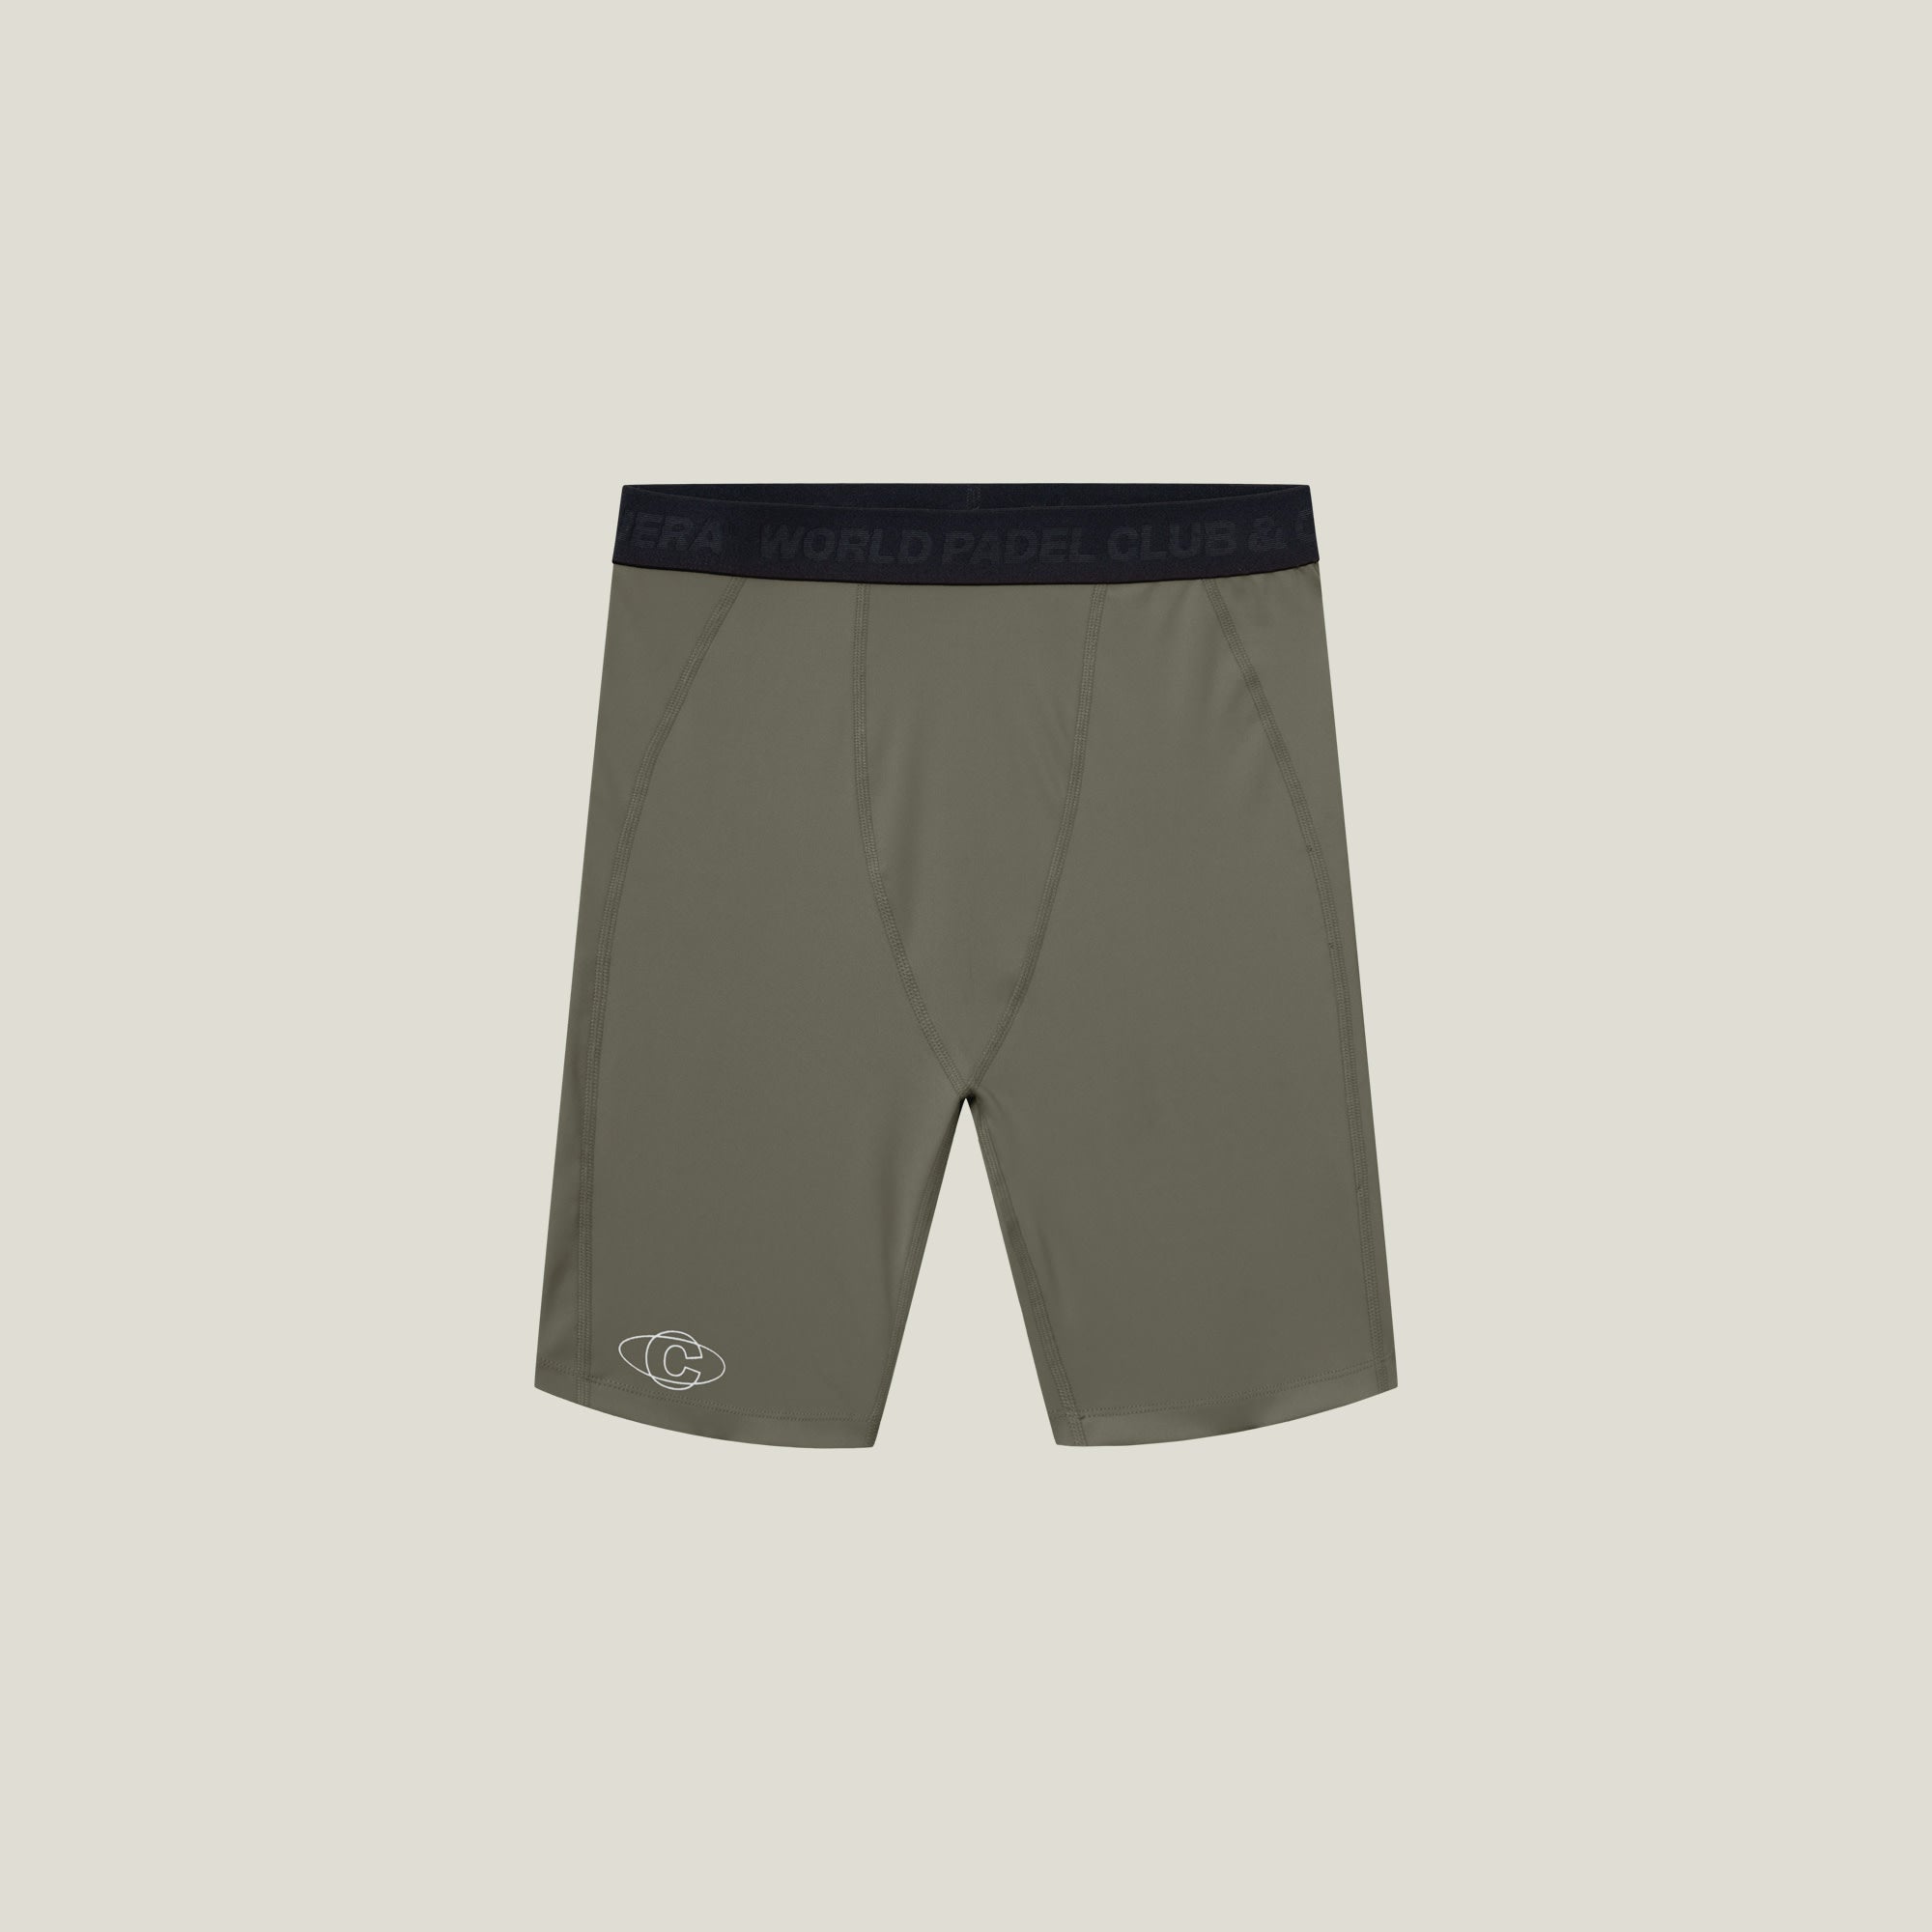 Oncourt Shorts Kit - Black & Army Combo